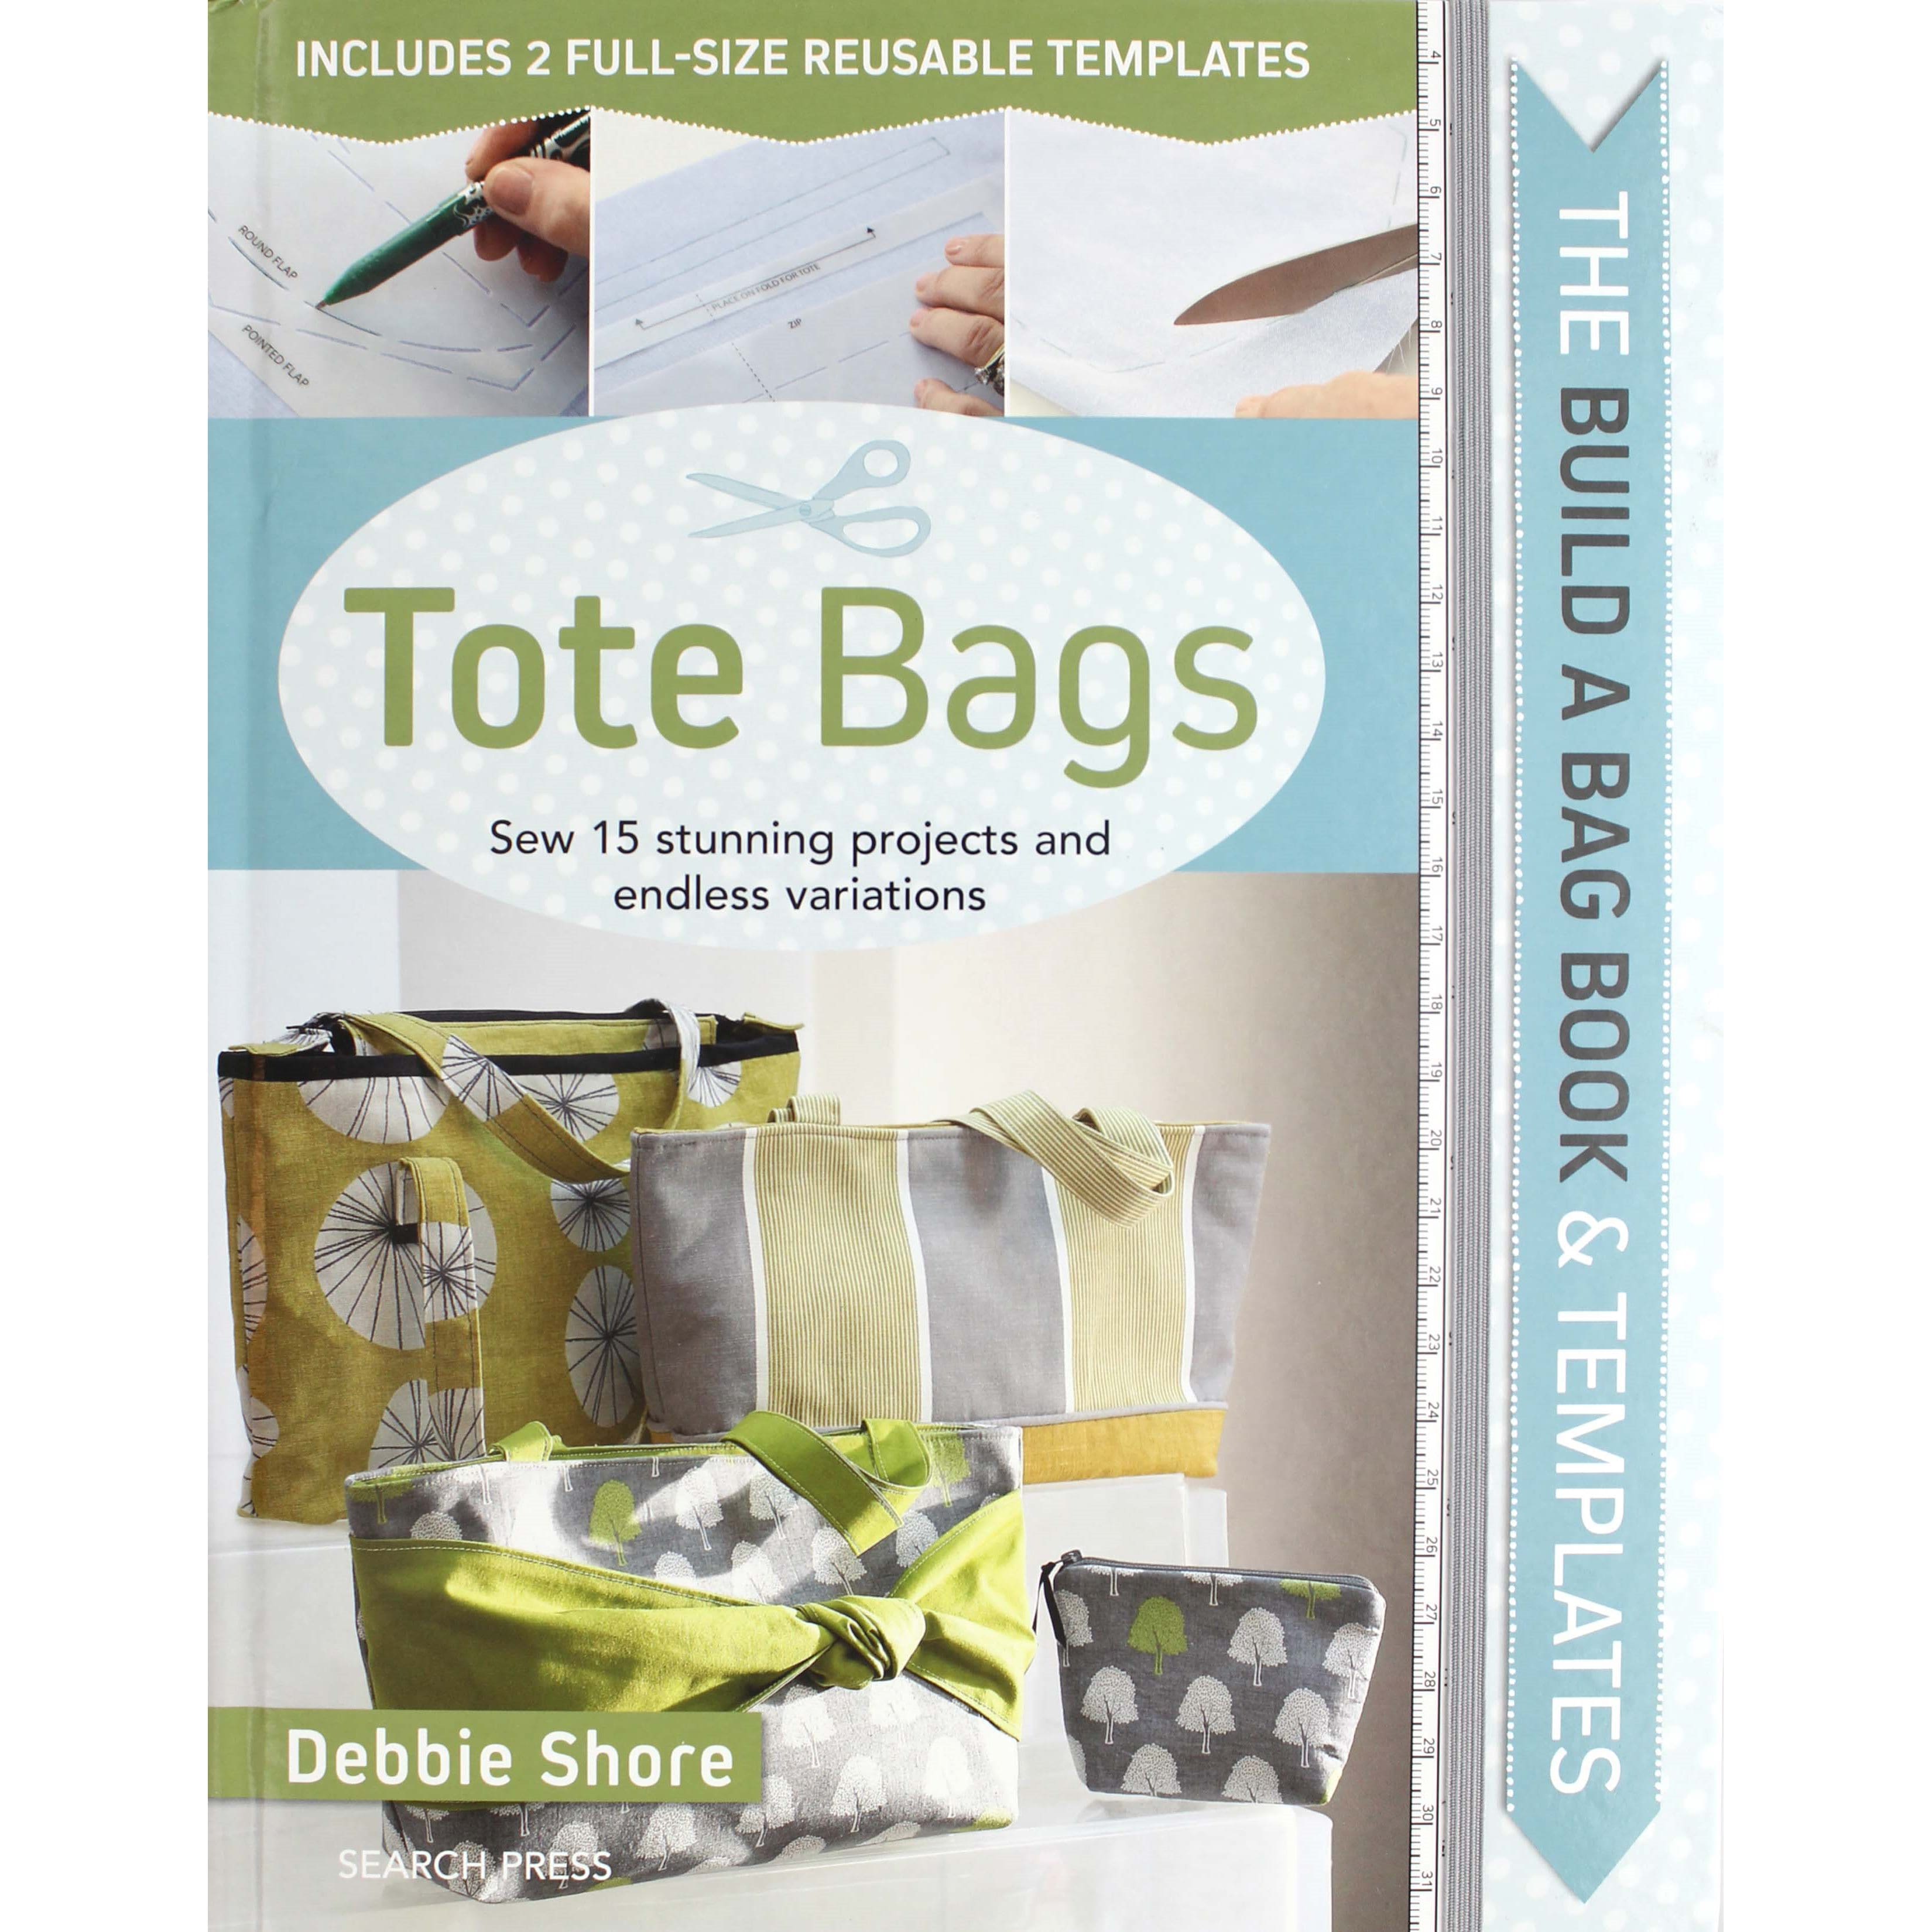 Search Press Build A Bag Tote Bags Book